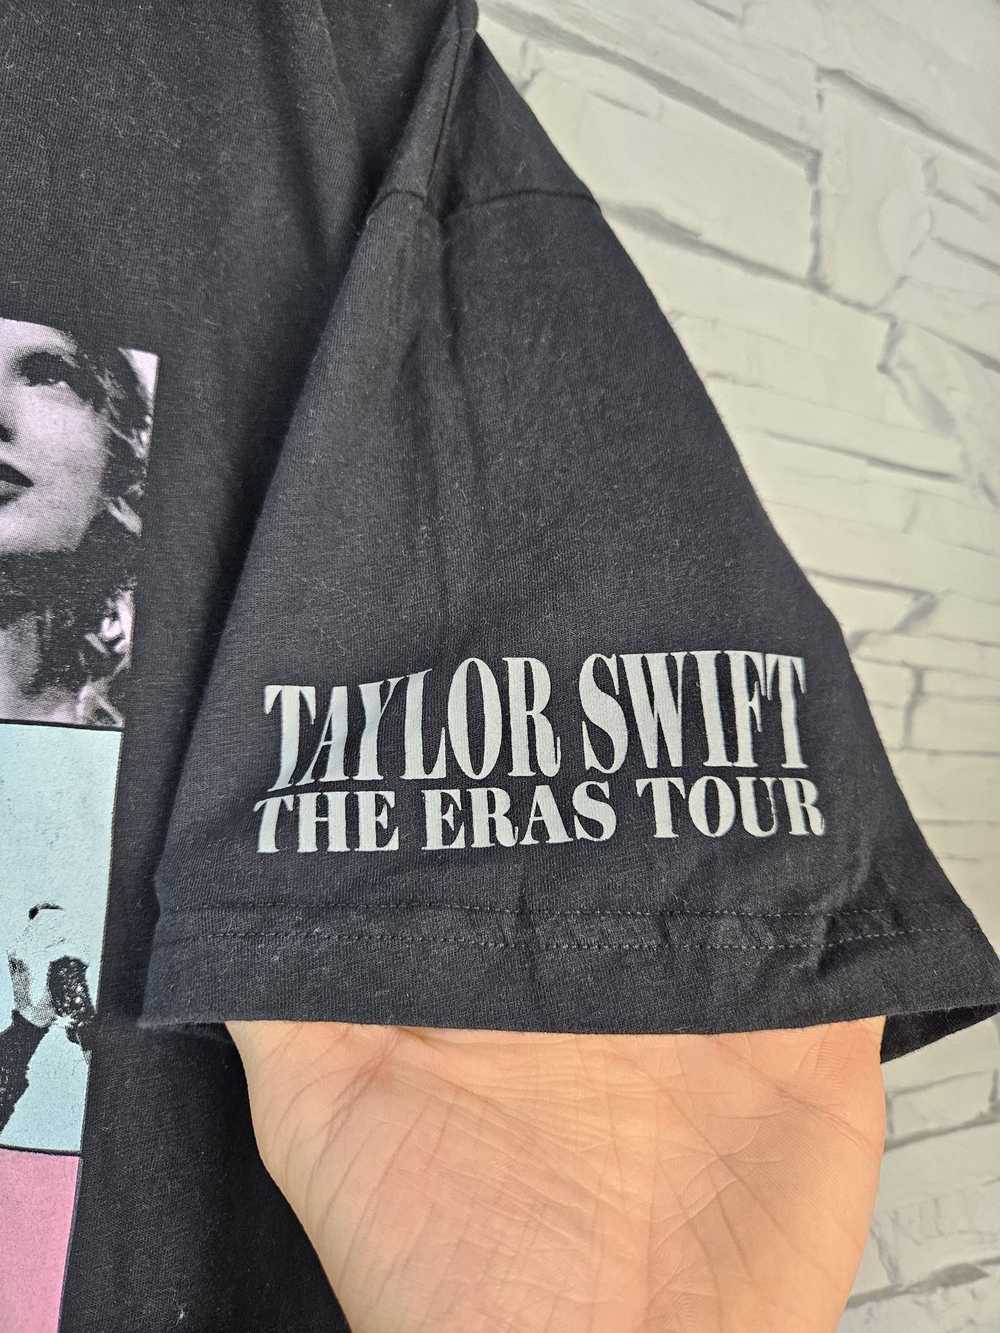 Band Tees Taylor Swift shirt The Eras Tour - image 3